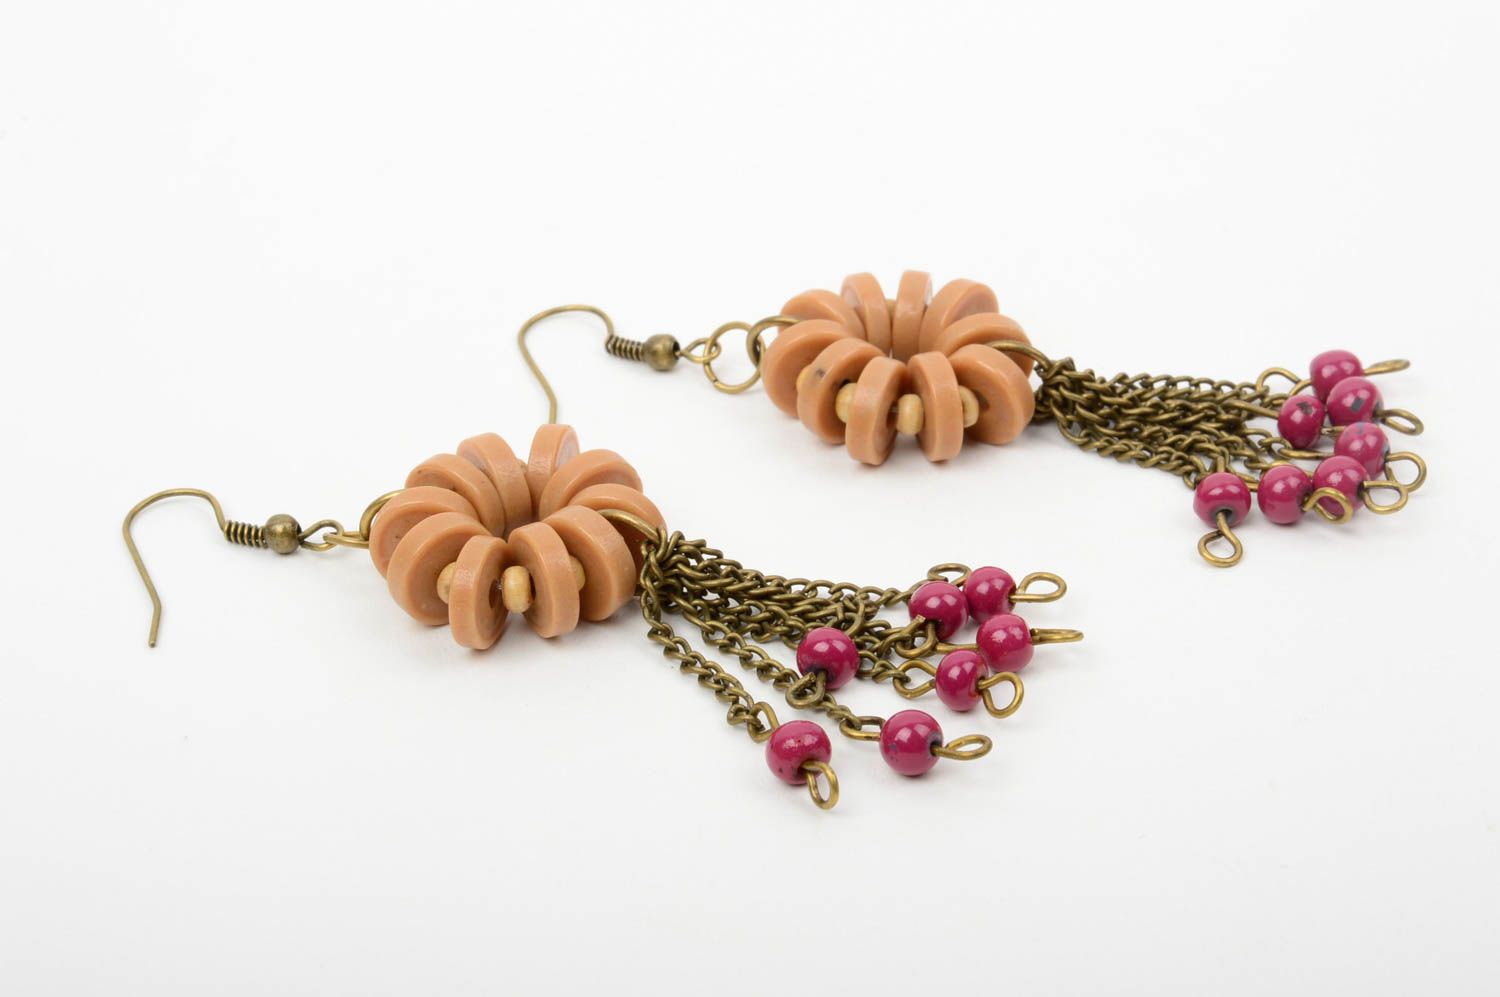 Handmade earrings designer jewelry unusual earrings for girls gift ideas photo 4